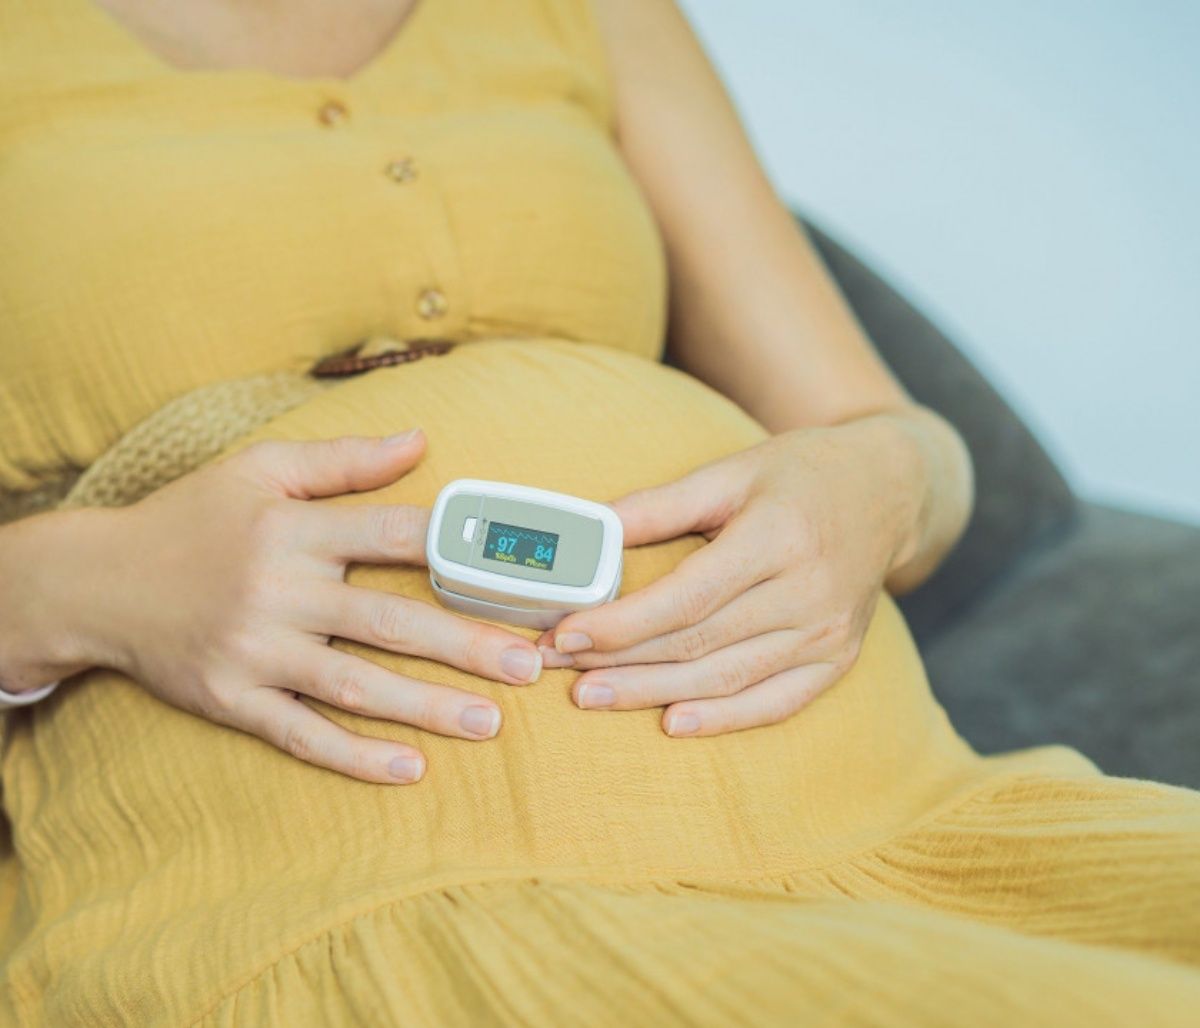 Covid-19: Οι πιθανές επιπτώσεις στην εγκυμοσύνη